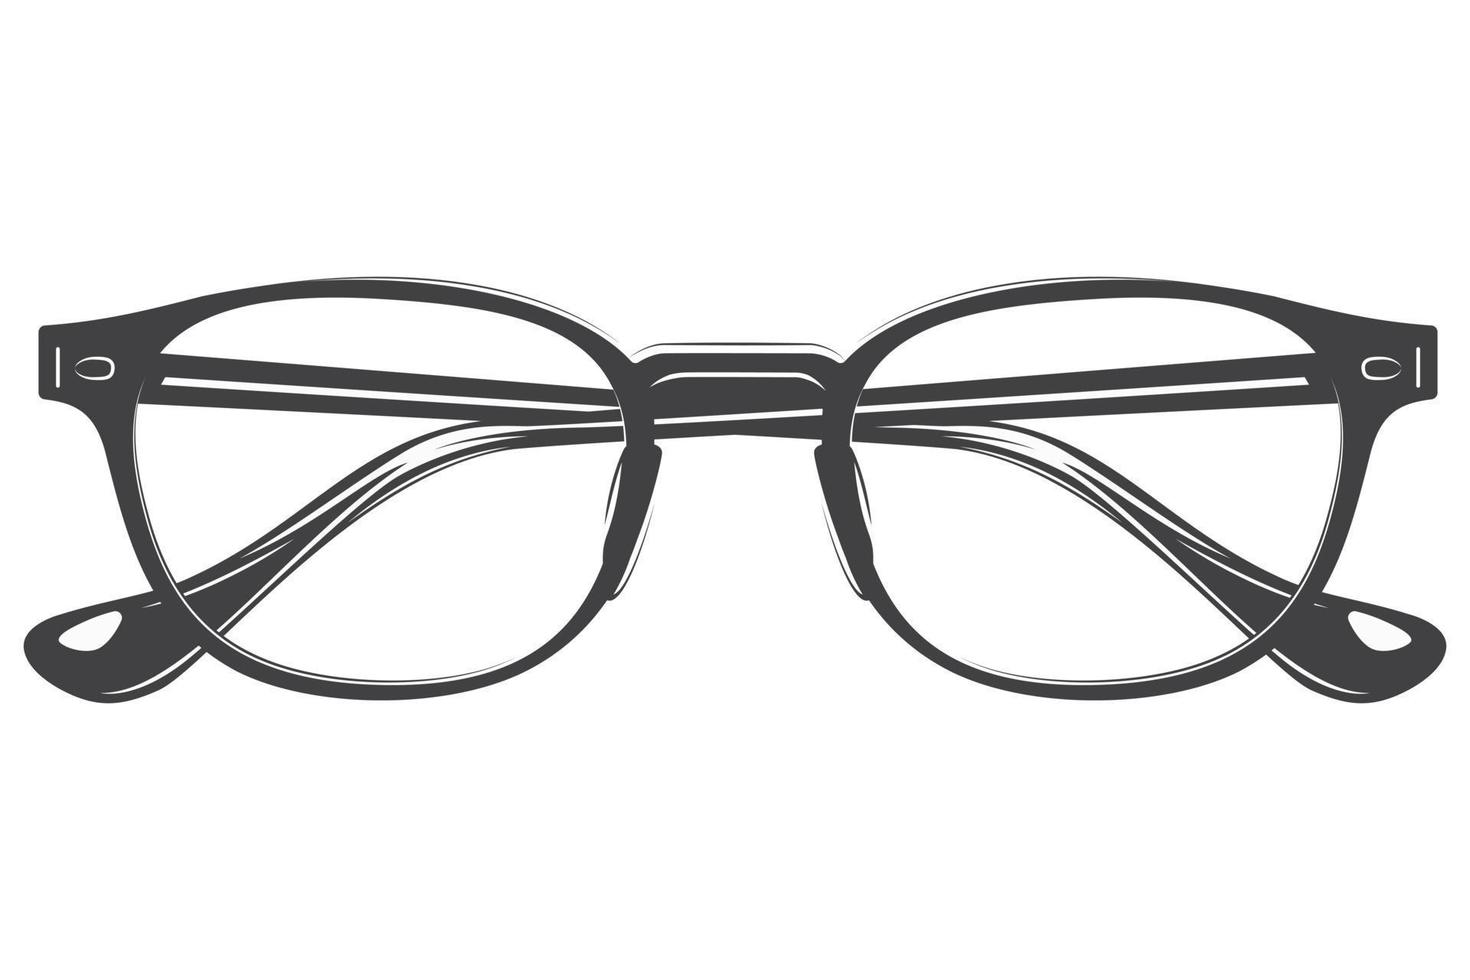 Abstract Minimal Eyeglasses - Black and White Eyeglasses vector